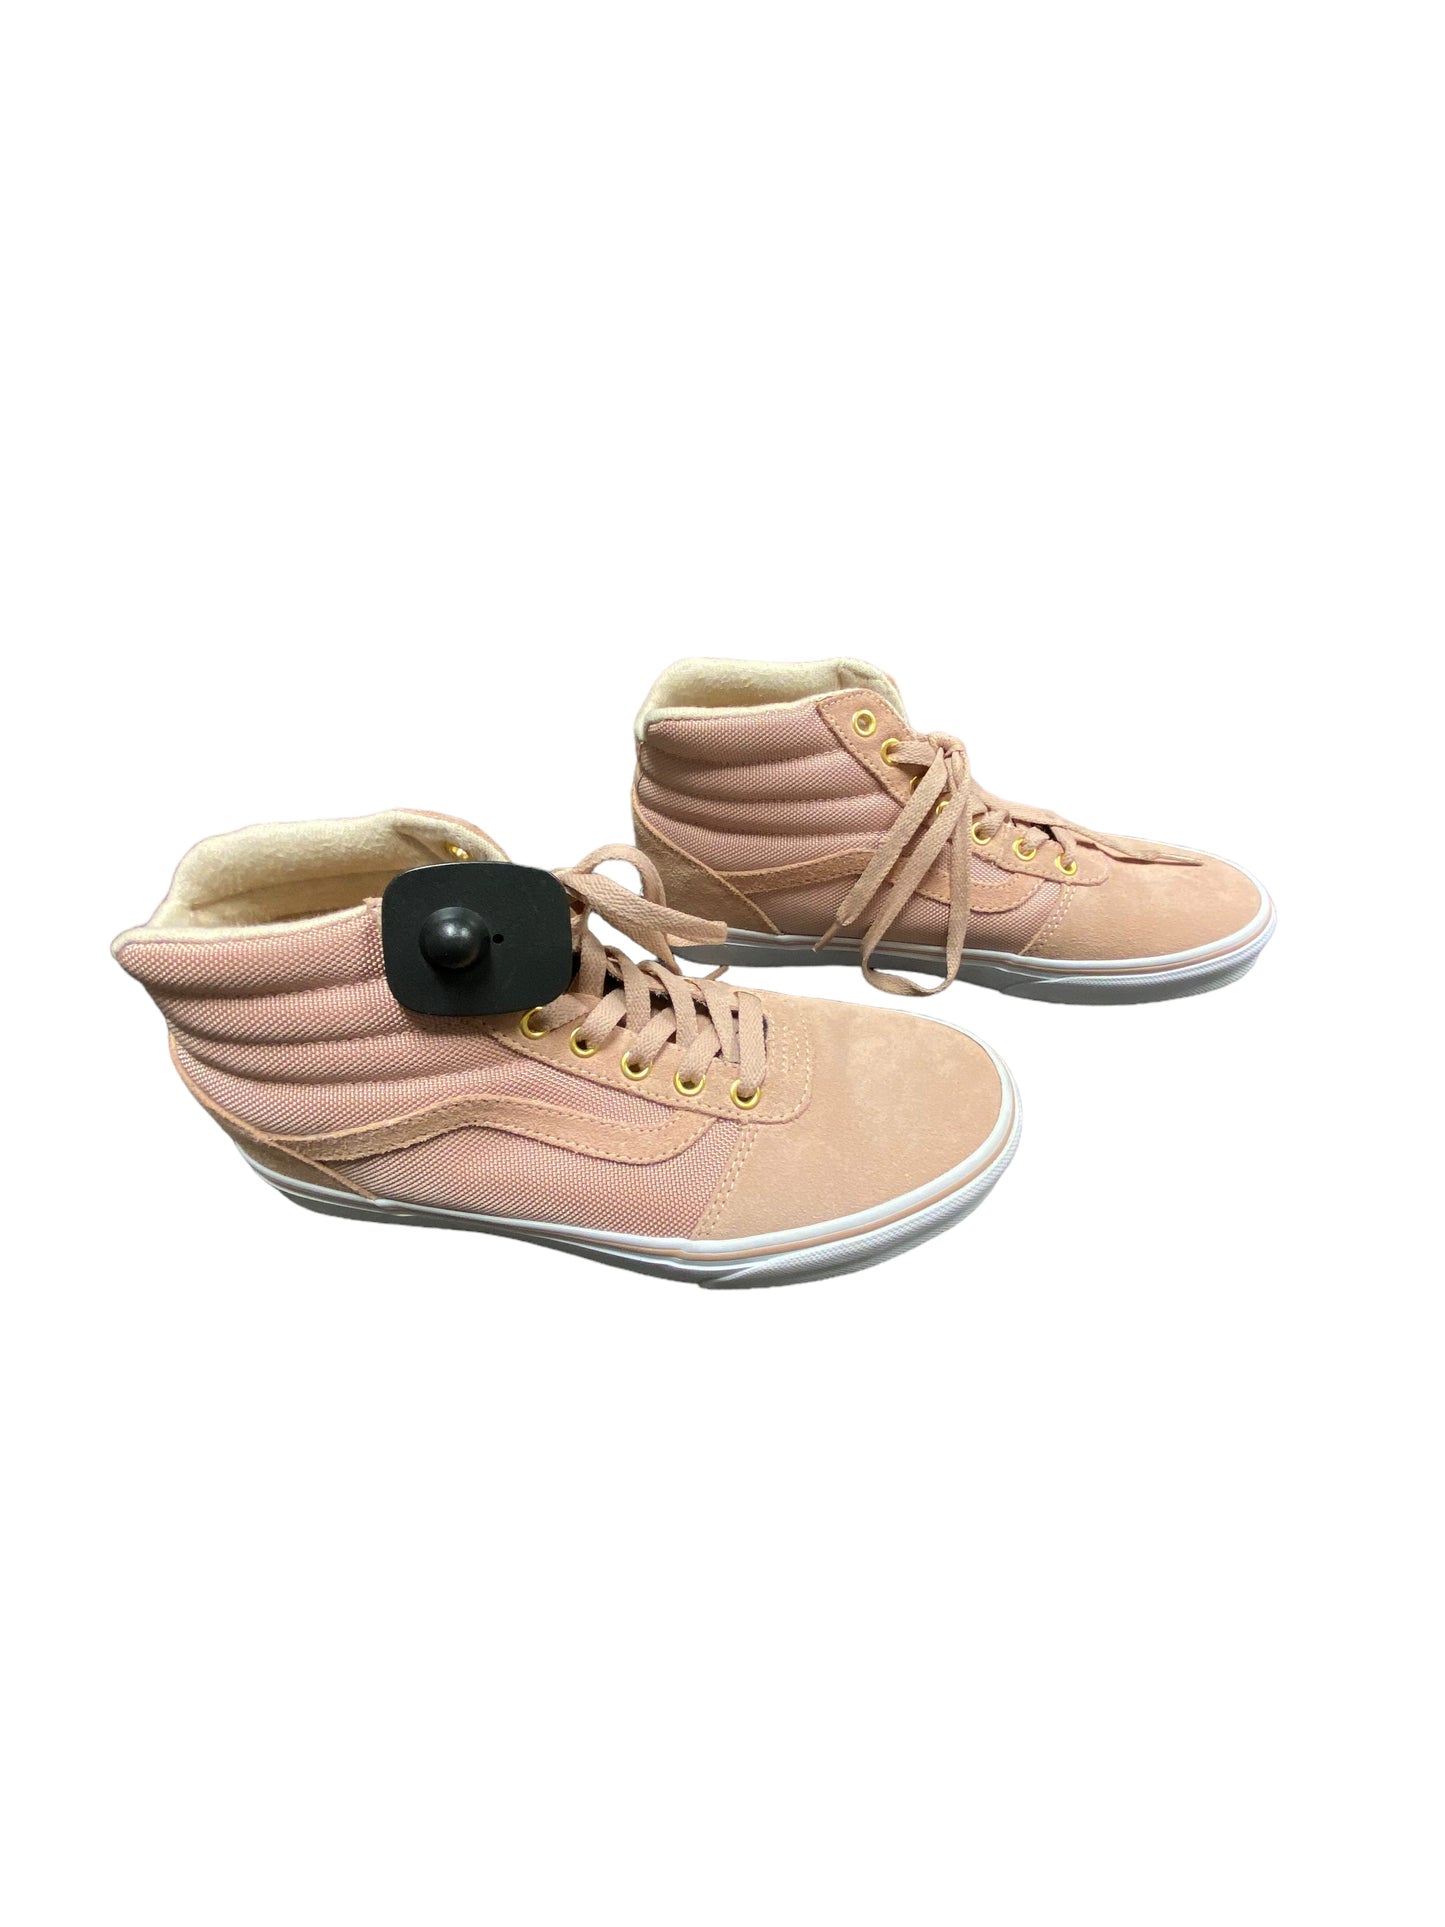 Pink Shoes Athletic Vans, Size 8.5